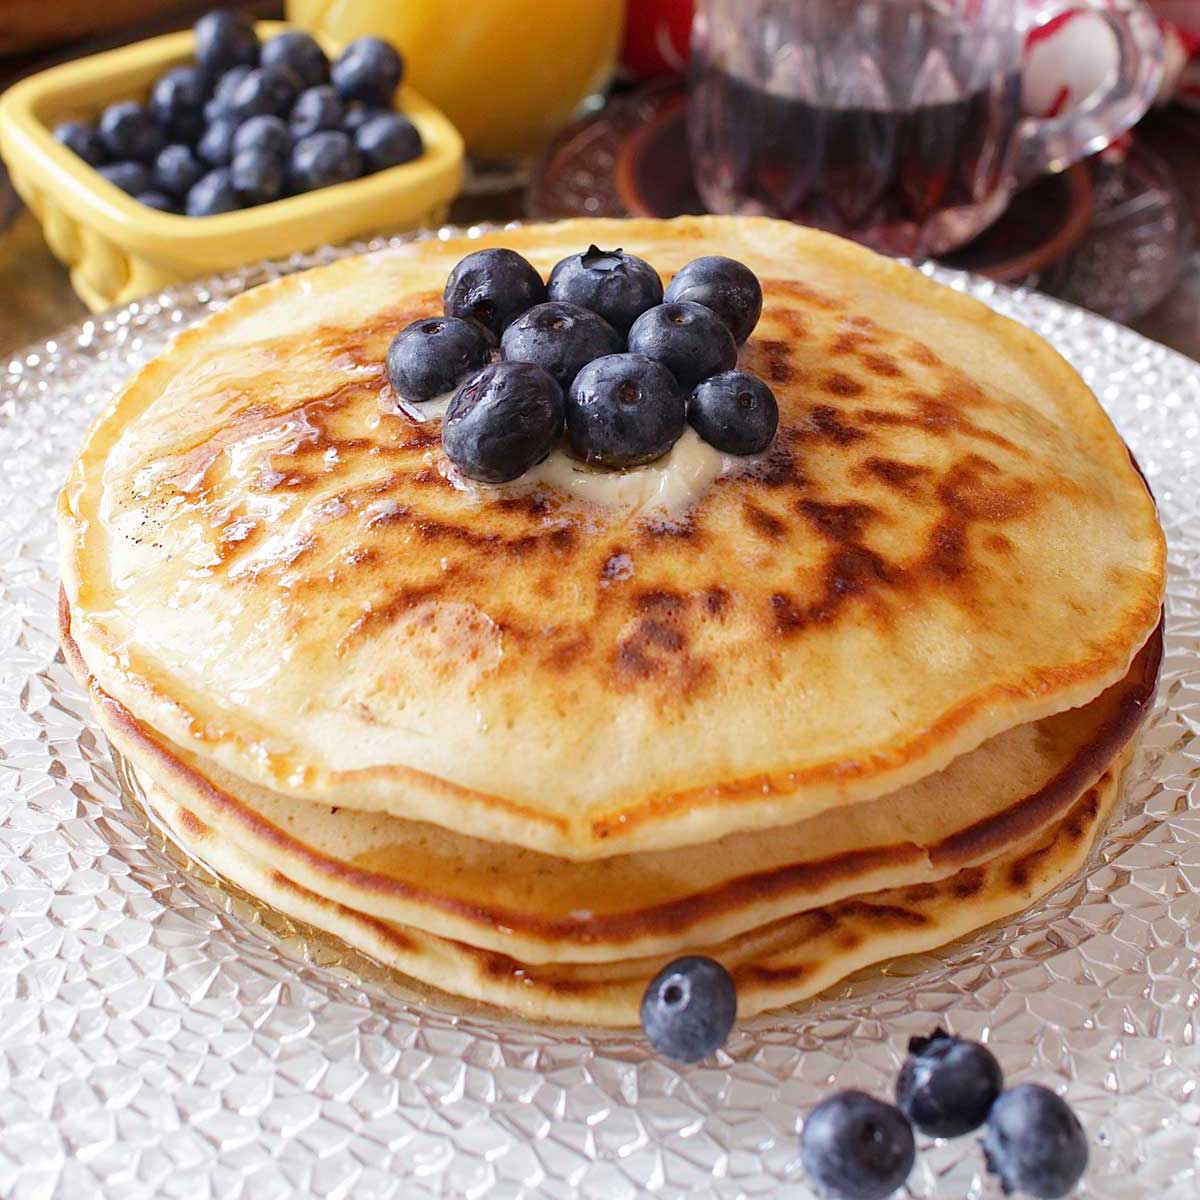 Share 51 kuva easy pancake recipe for one